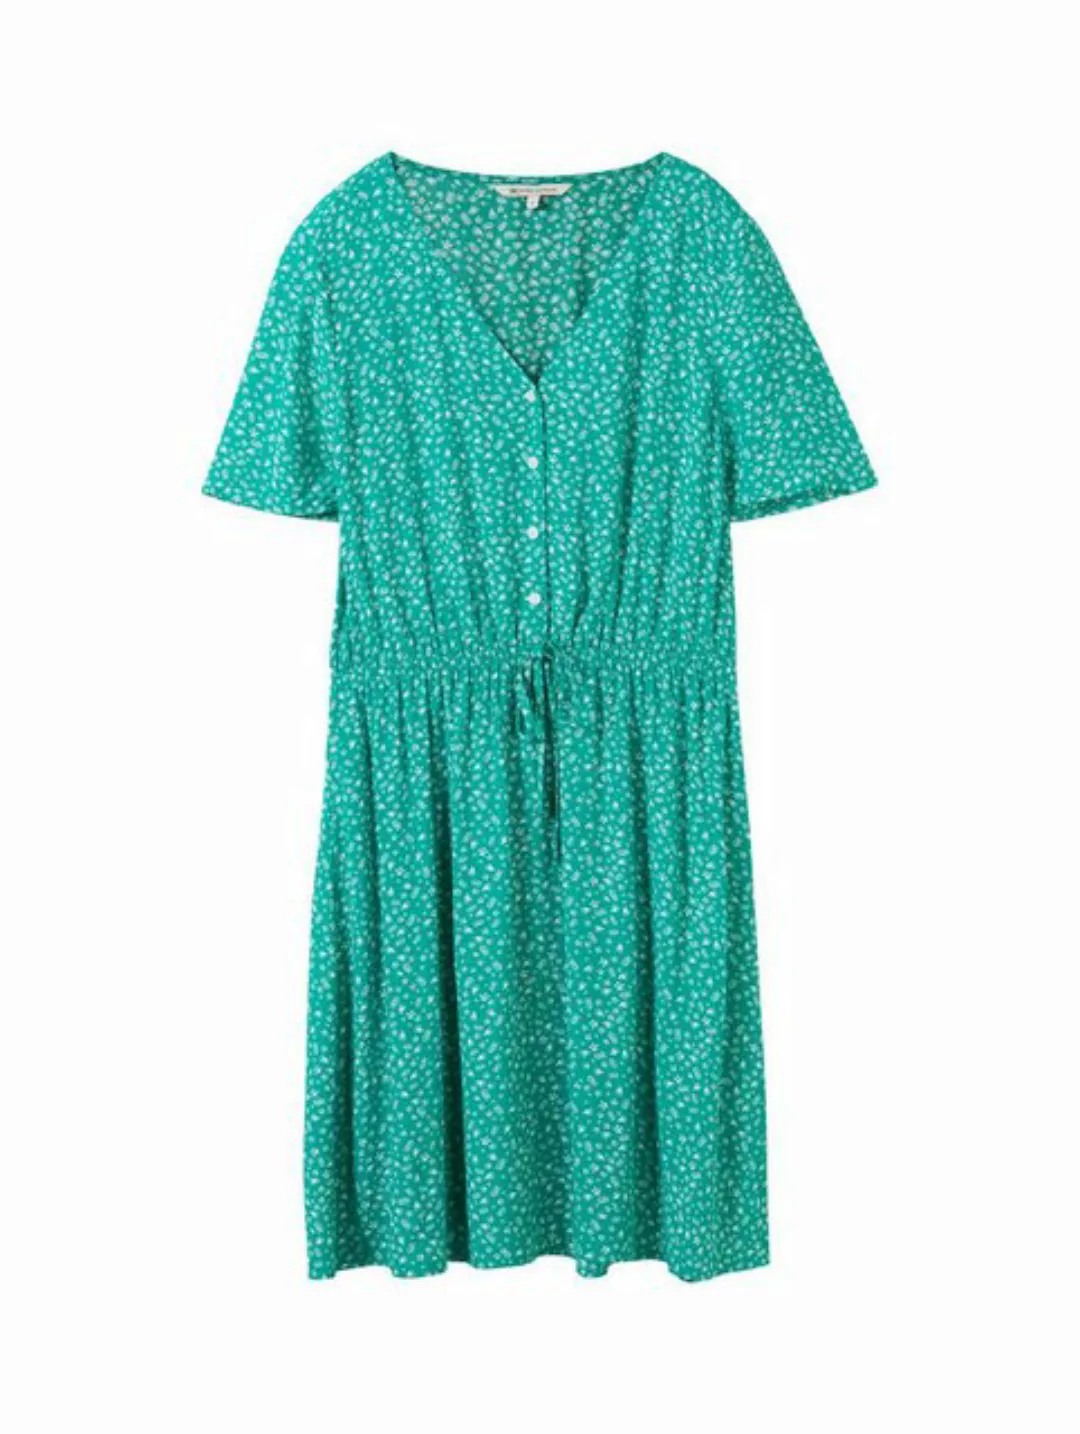 TOM TAILOR Denim Sommerkleid printed viscose mini dress, mid blue minimal p günstig online kaufen